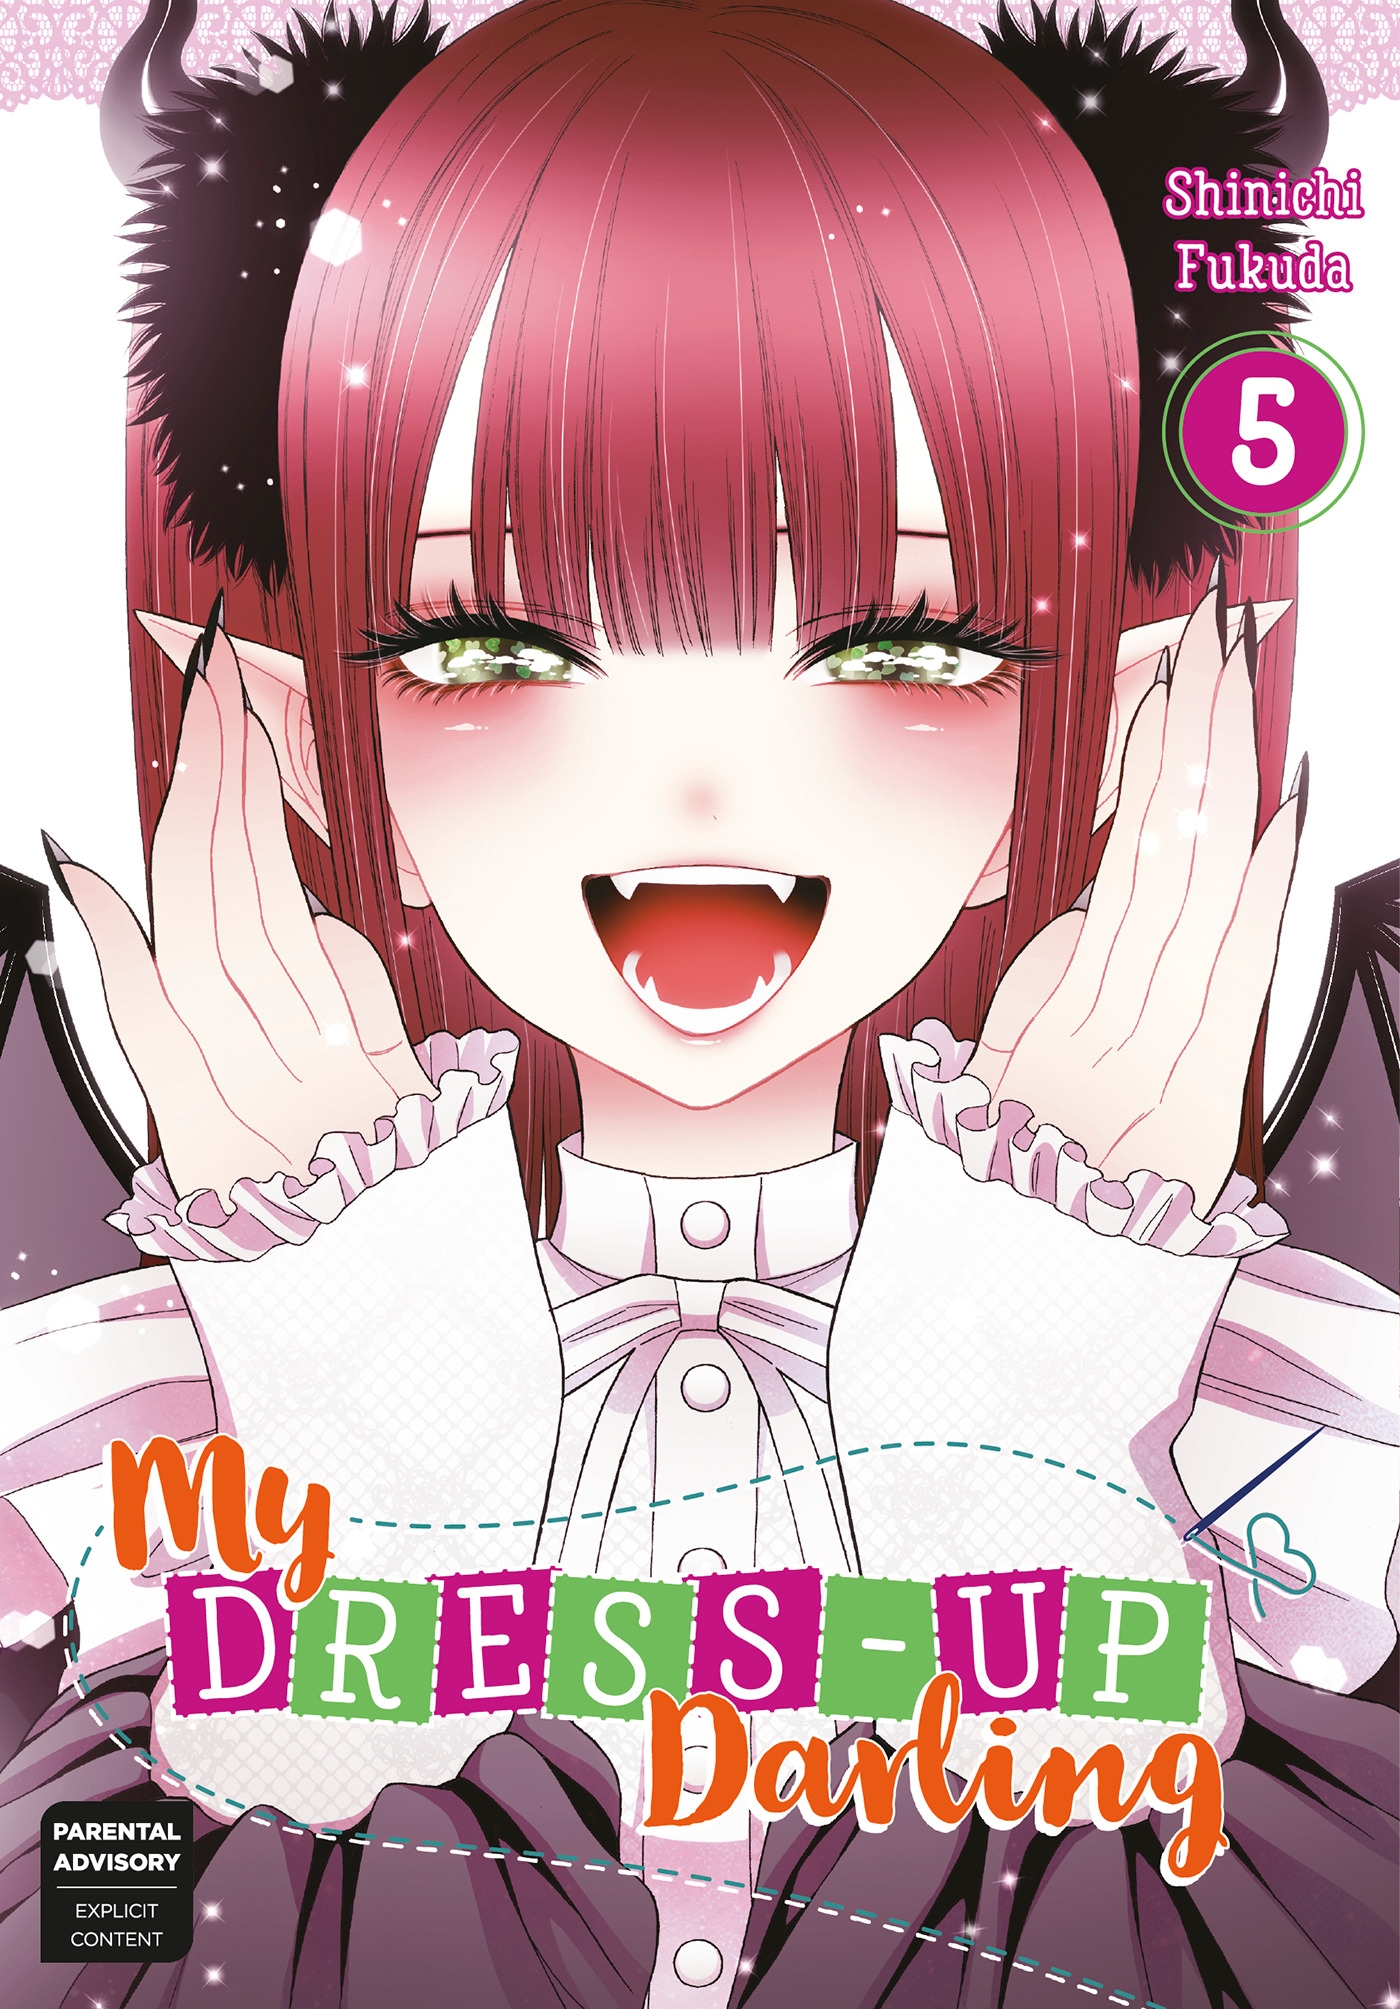 My Dress Up Darling Ch 92 My Dress-Up Darling 05 by Shinichi Fukuda - Penguin Books New Zealand